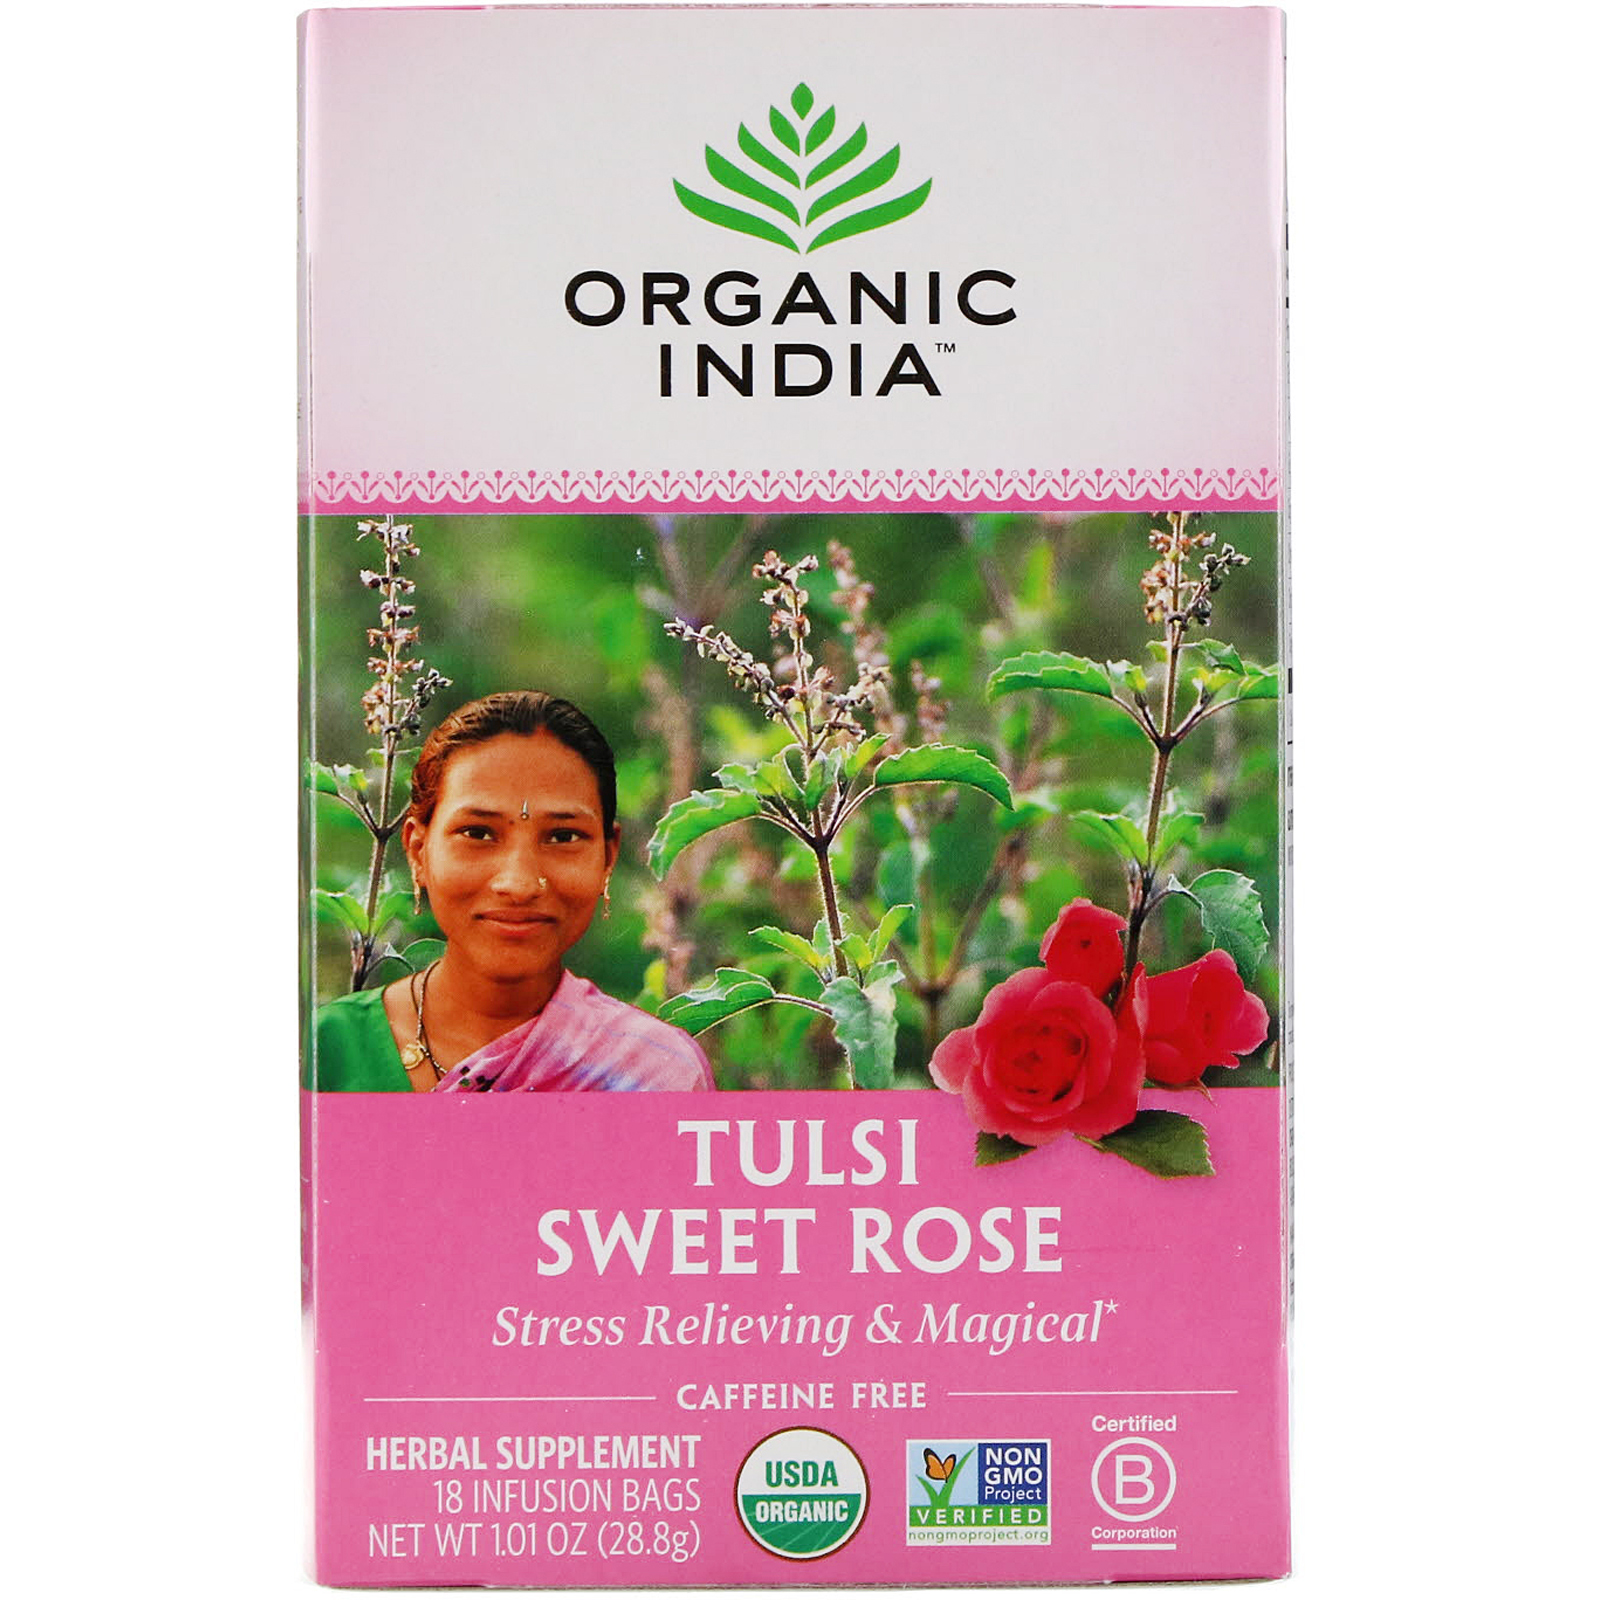 Organic India, Tulsi Sweet Rose, Caffeine Free, 18 Infusion Bags, 1.01 oz (28.8 g)